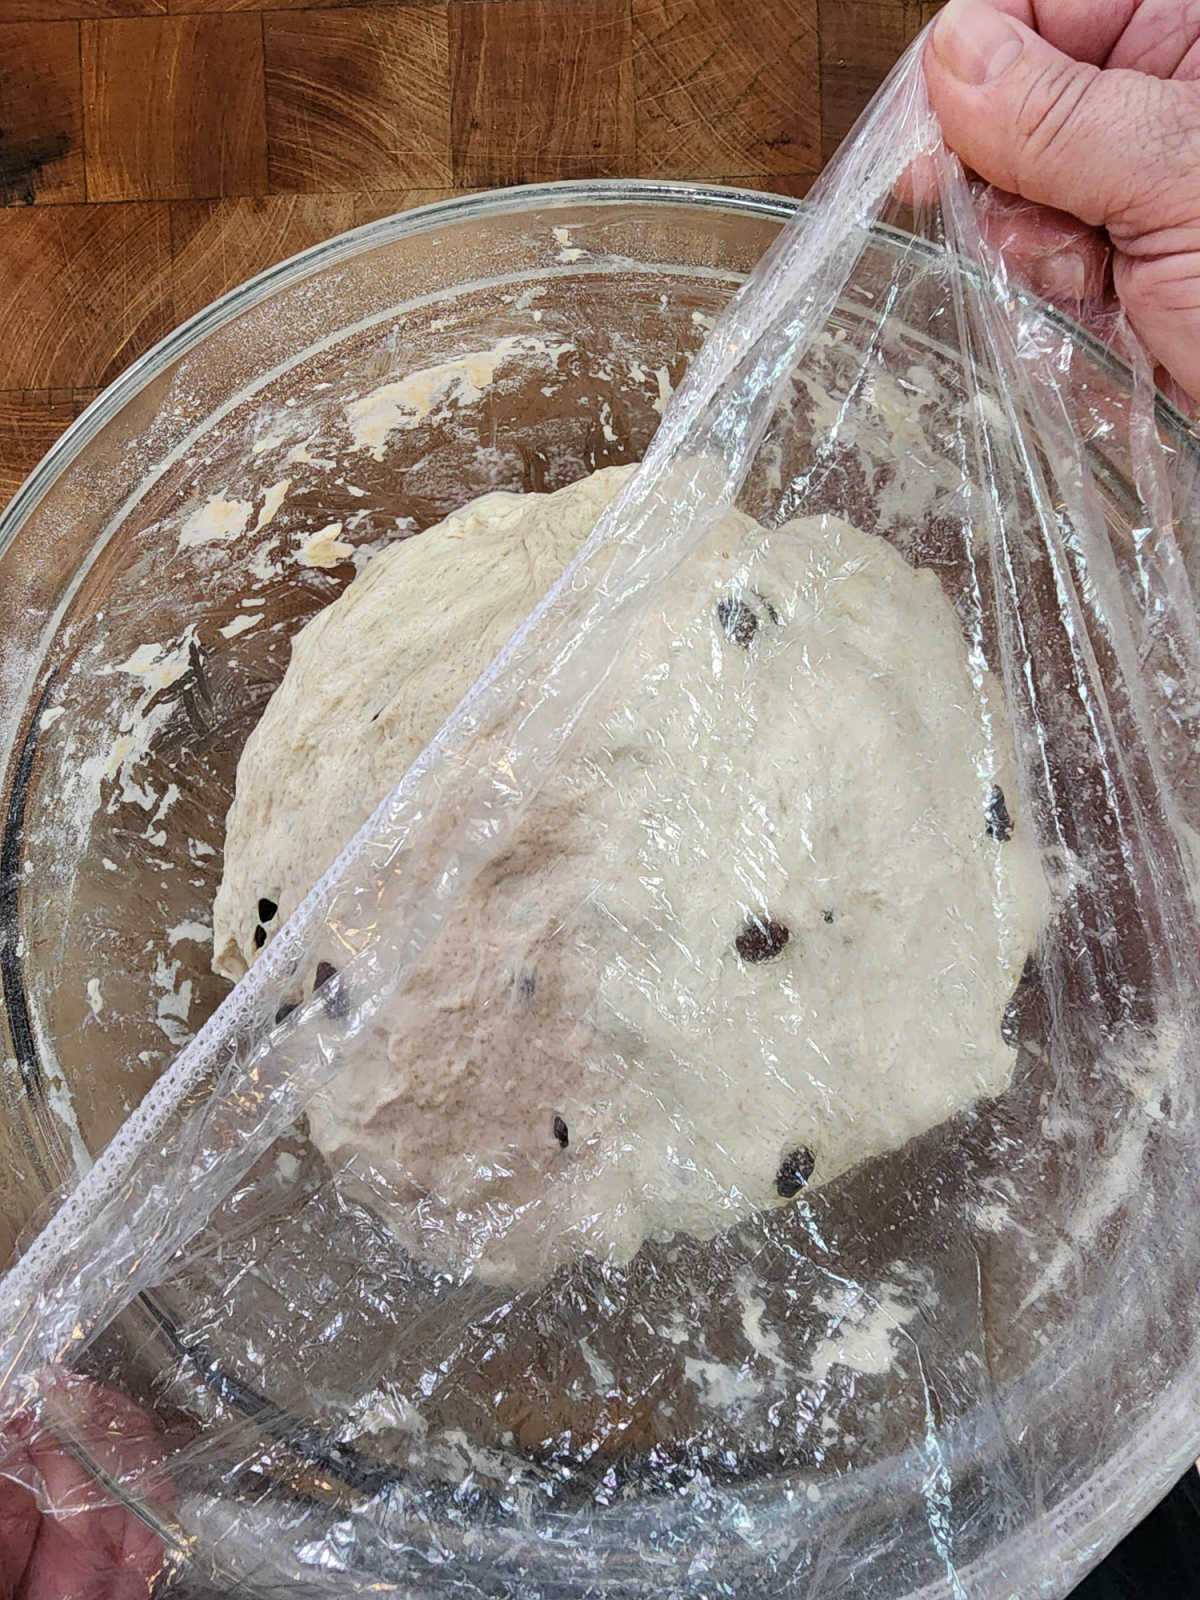 Covering clear glass bowl of sourdough dough with reusable shower cap.